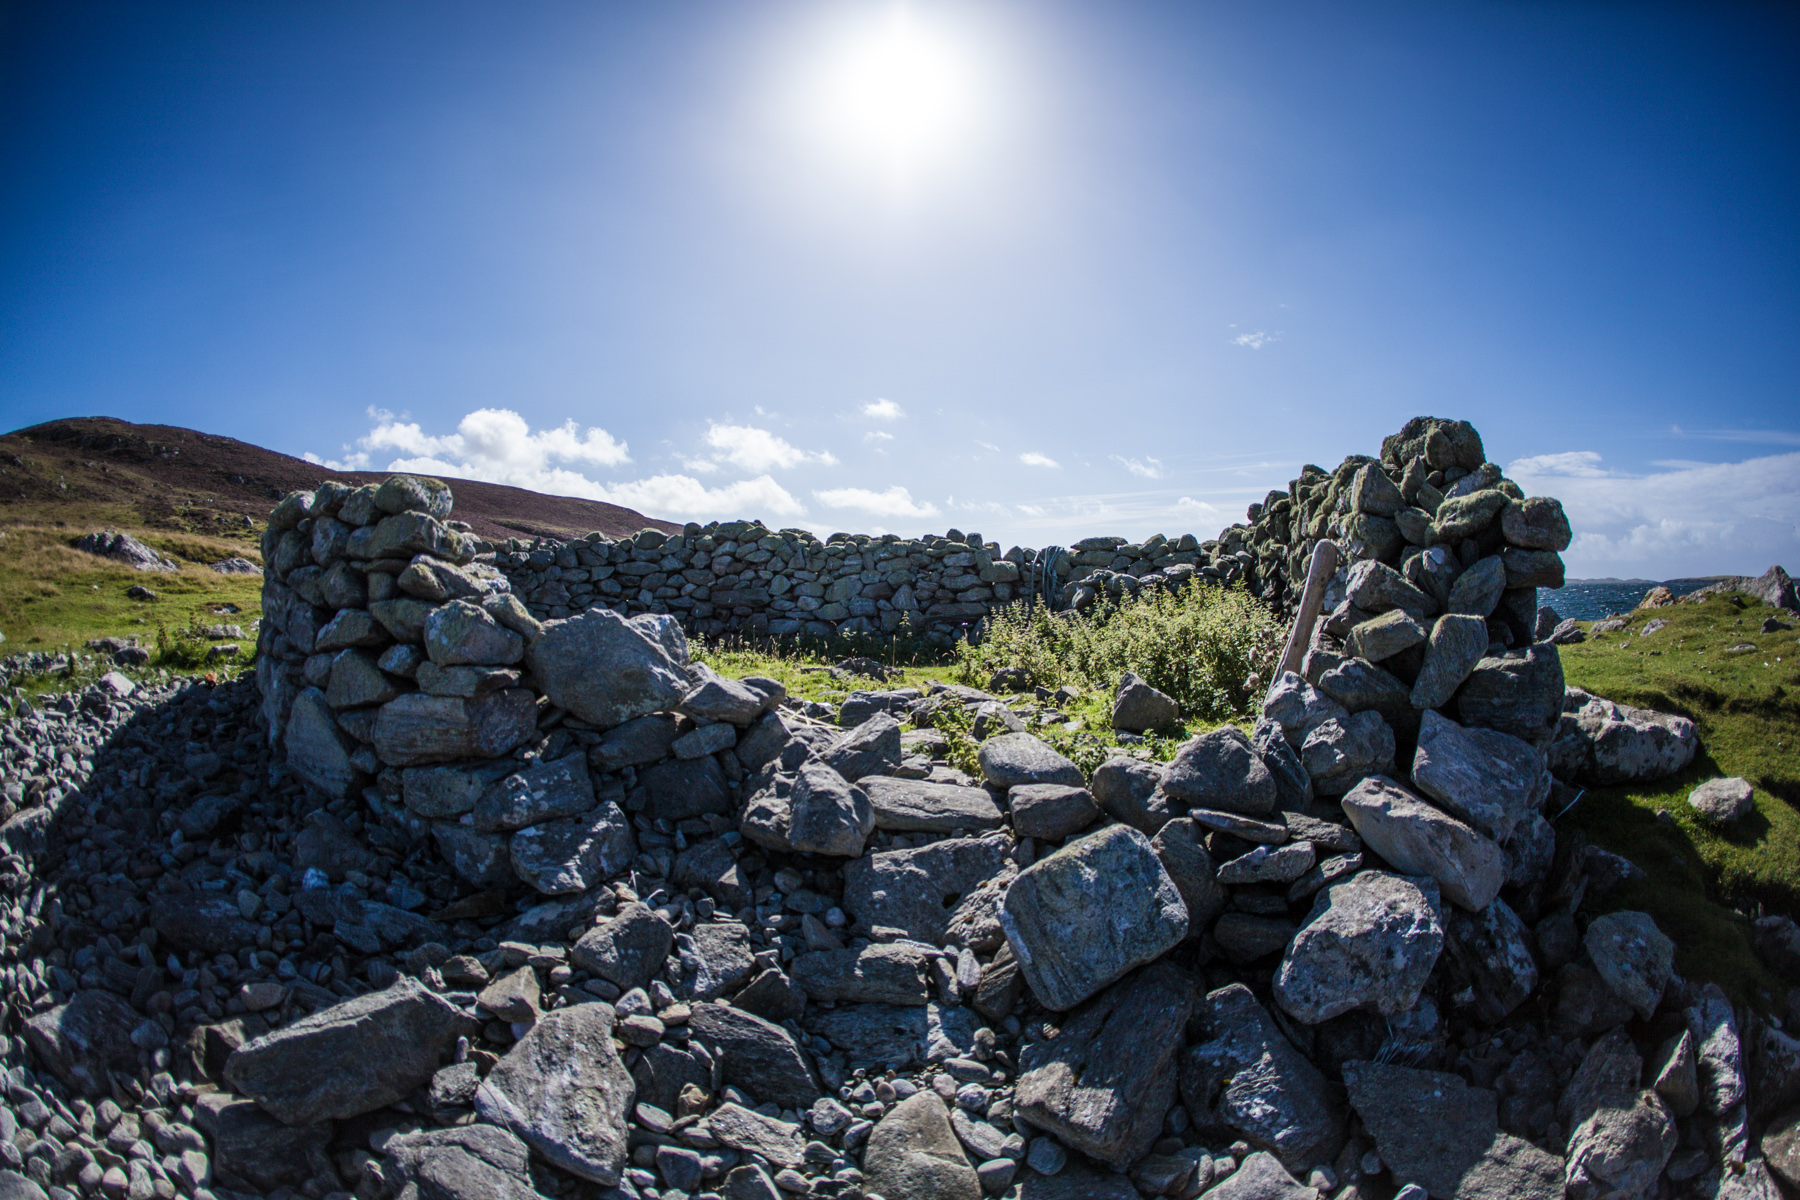 sunlight on rocky outcrop